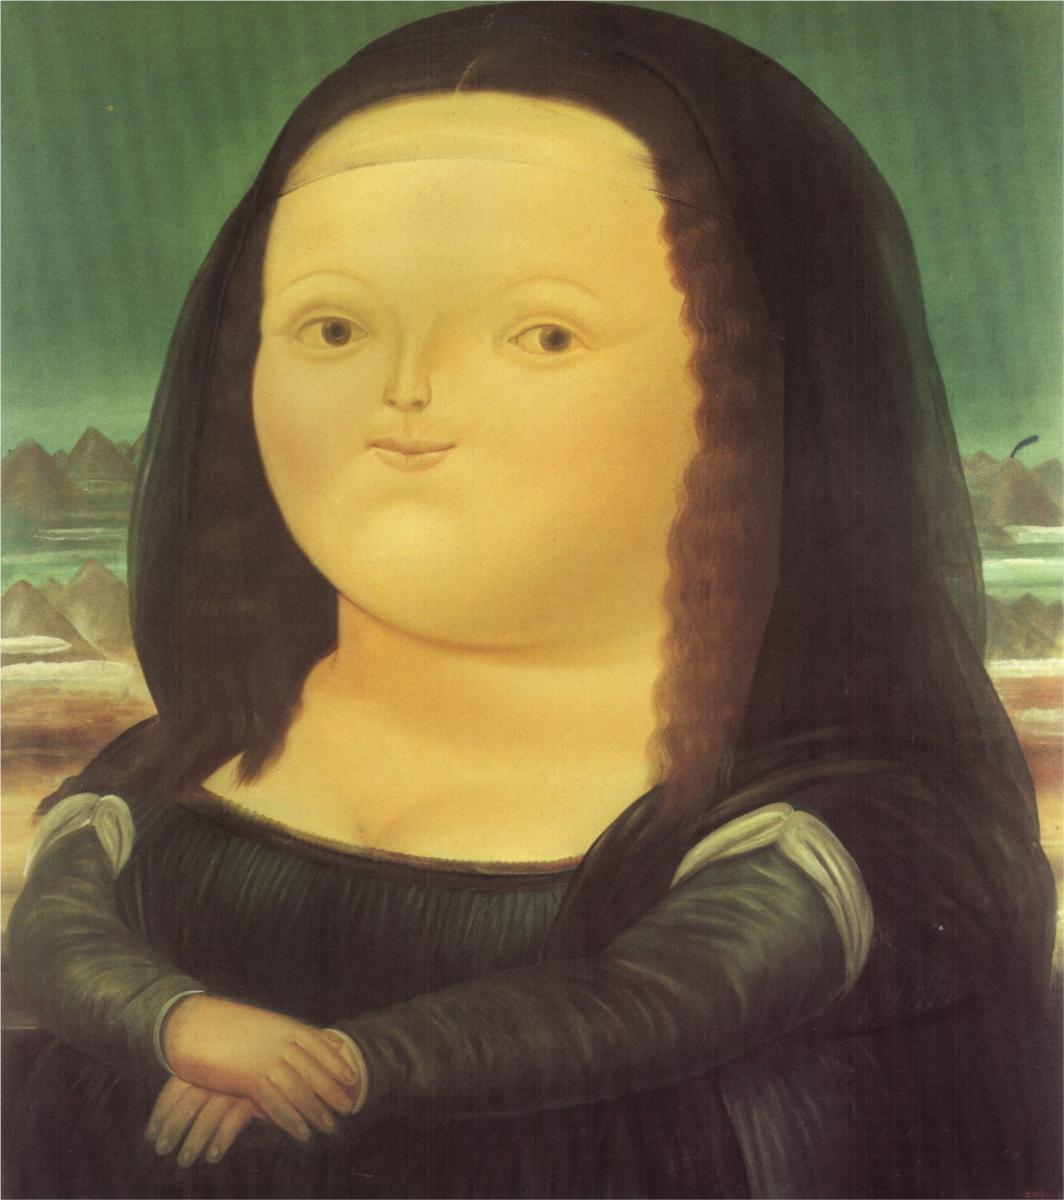 مونا لیزا by Fernando Botero - 1978 - - 